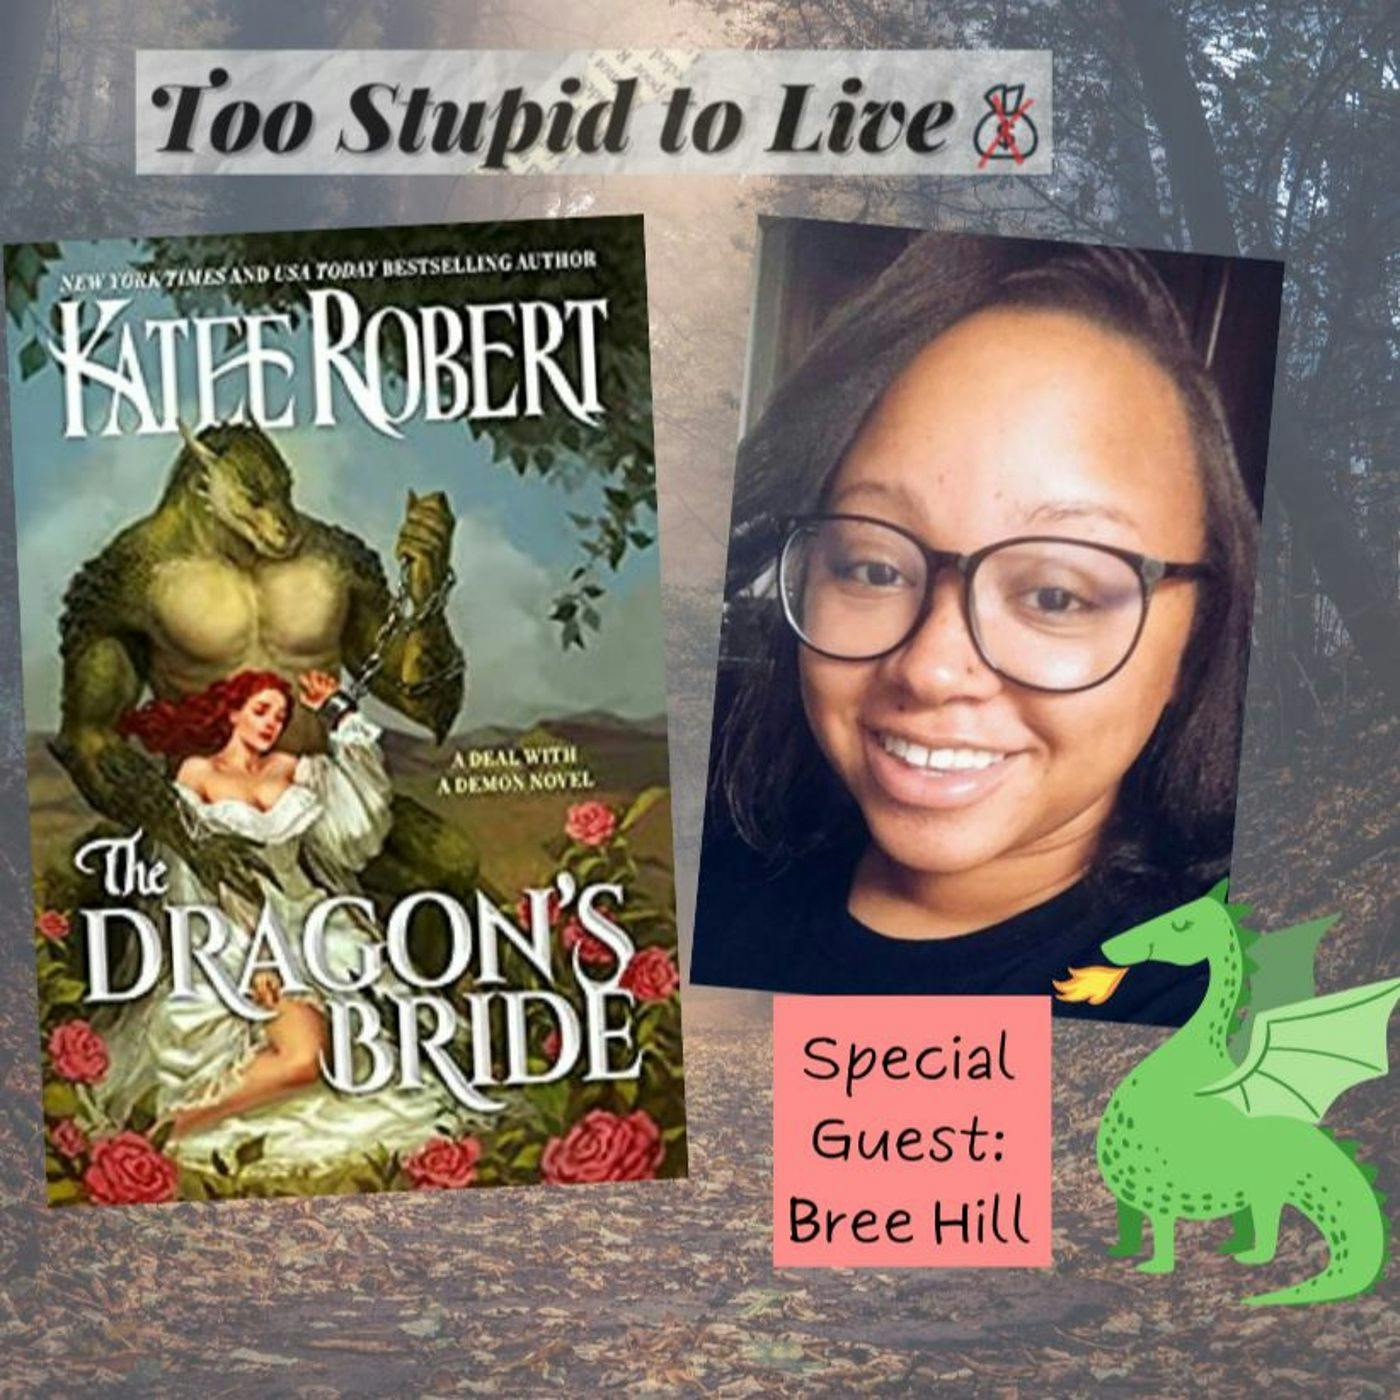 The Dragon’s Bride with Bree Hill